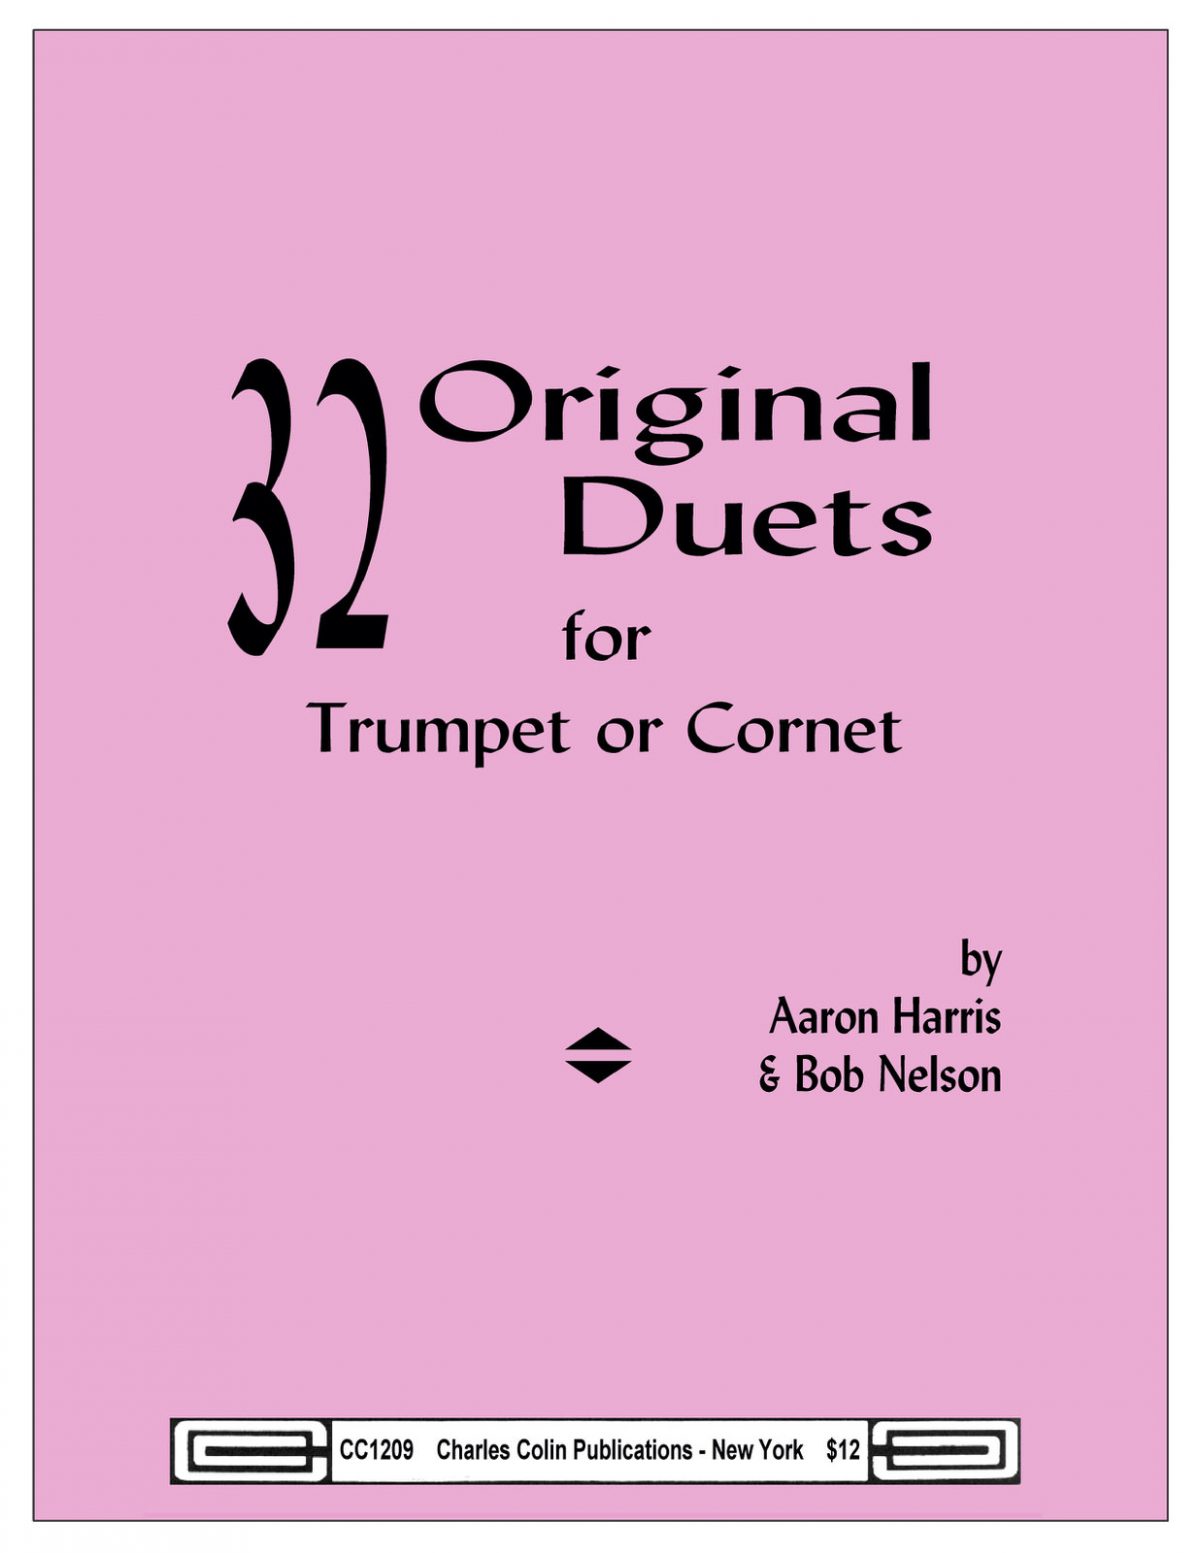 Harris-Nelson, 32 Original Duets